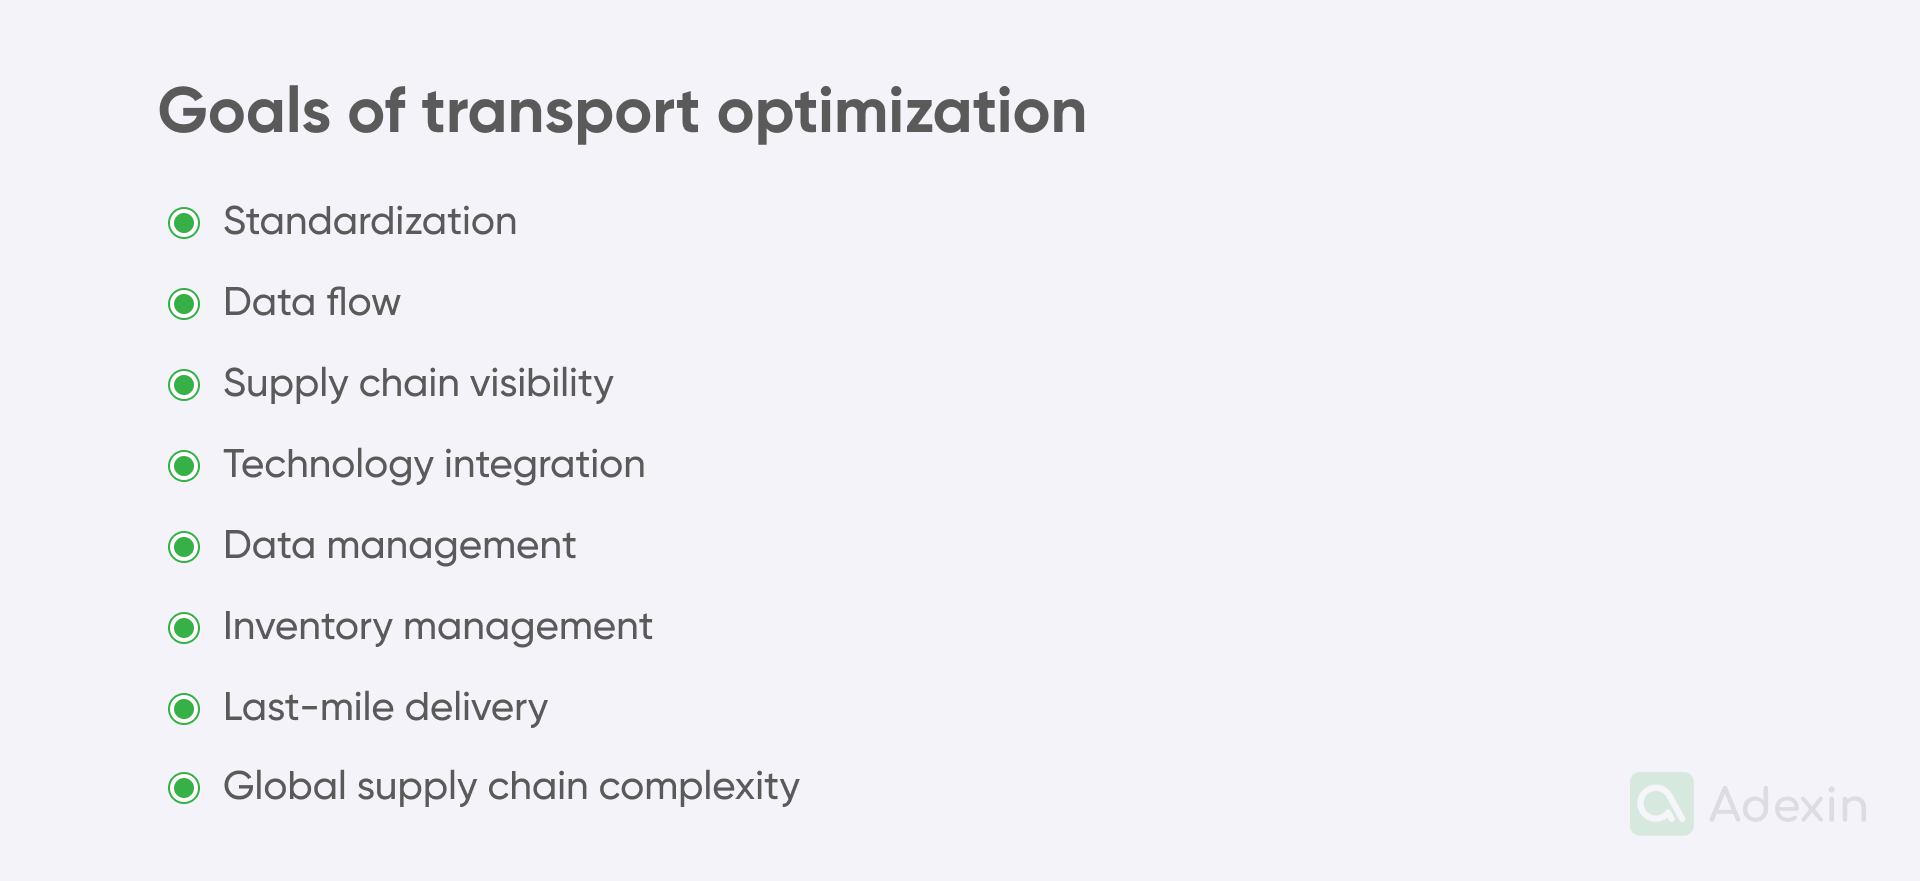 Goals of transport optimization